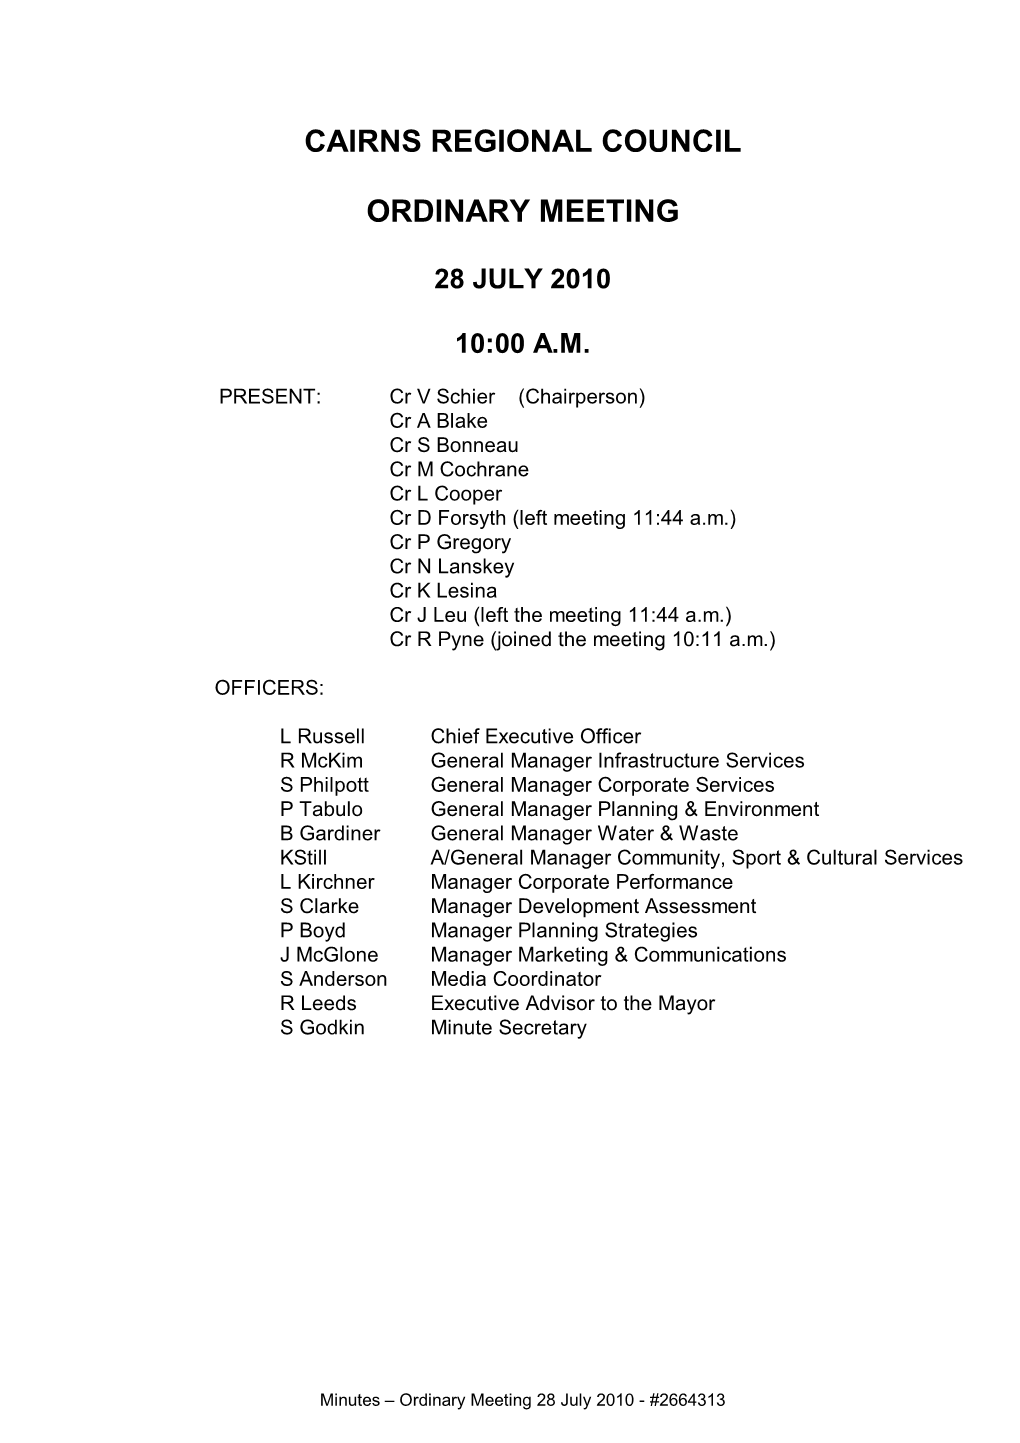 Cairns Regional Council Ordinary Meeting